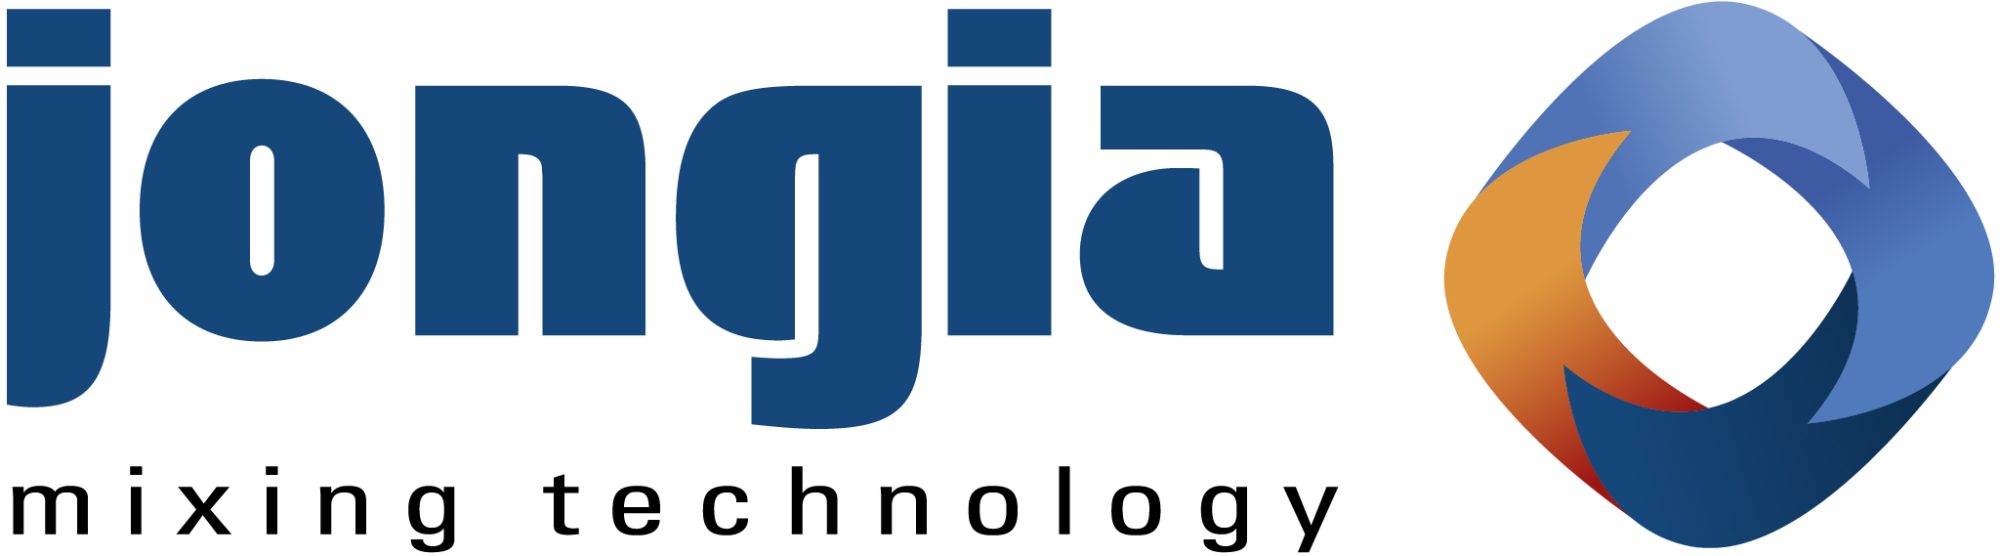 Jongia Mixing Technology logo blauwe en zwarte letters met symbool